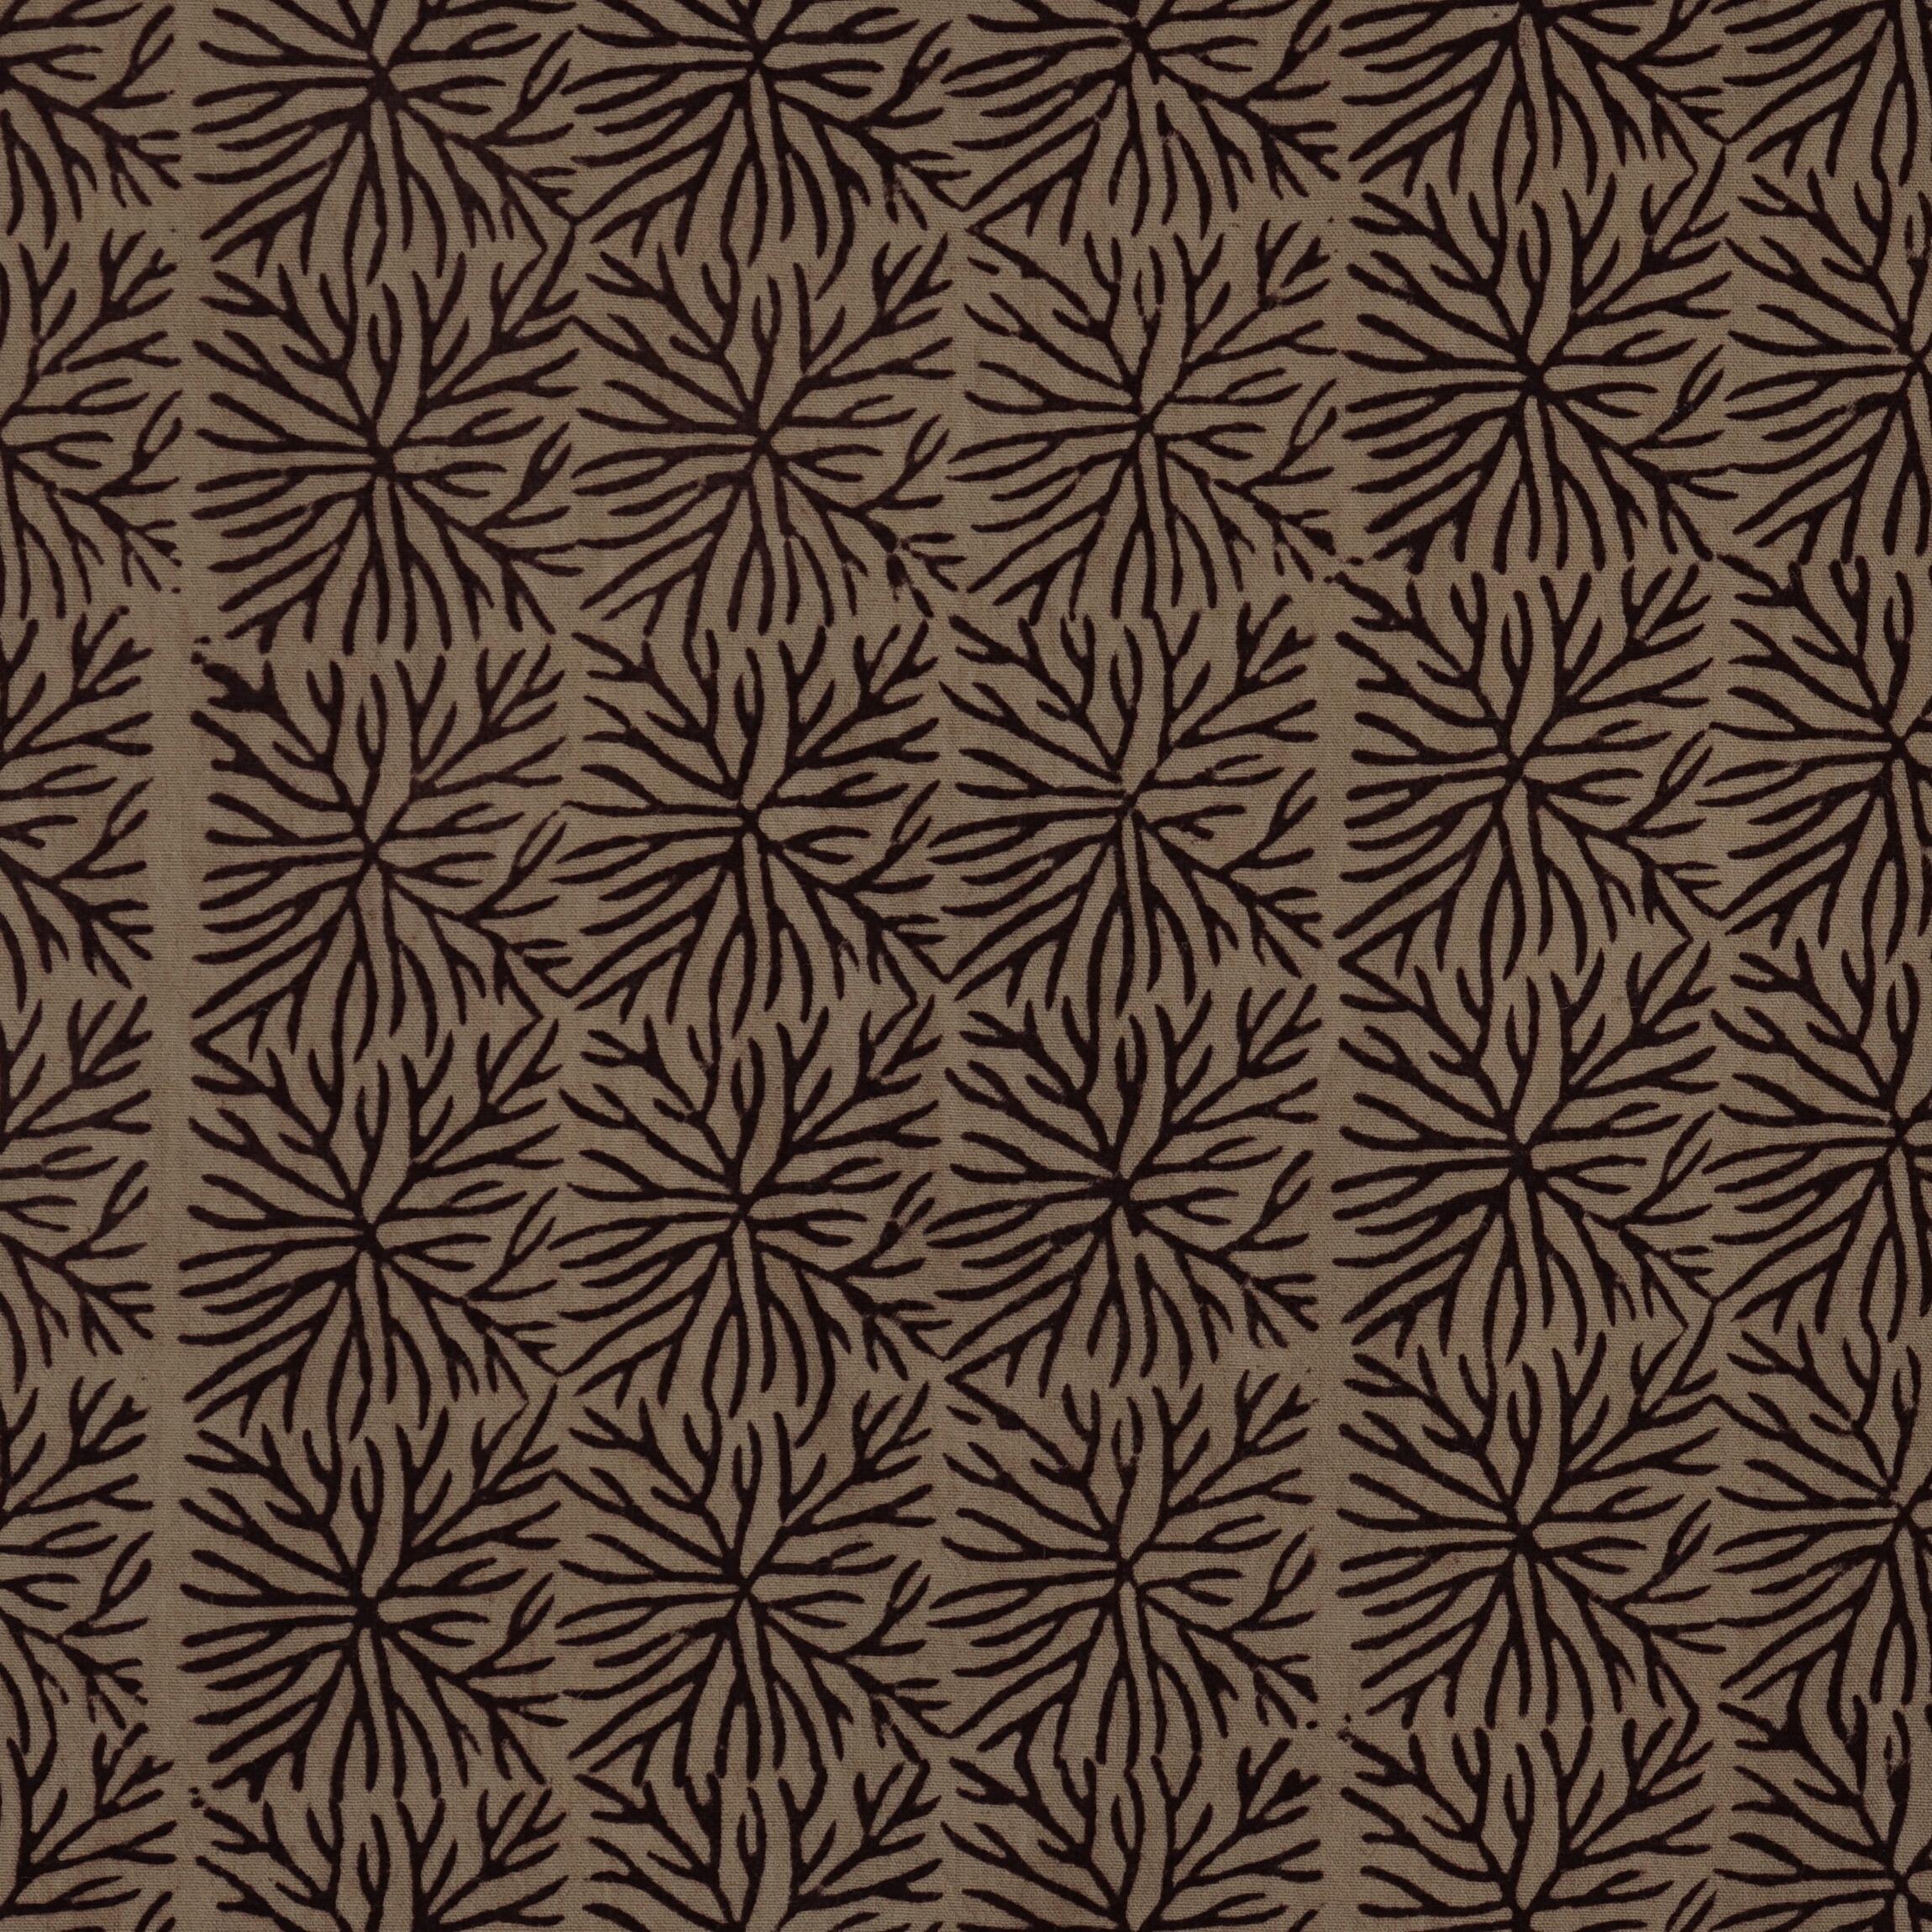 100% Block-Printed Cotton Fabric From India- Bagh - Iron Rust Black & Indigosol Khaki - Pagan Crown Print - Flat